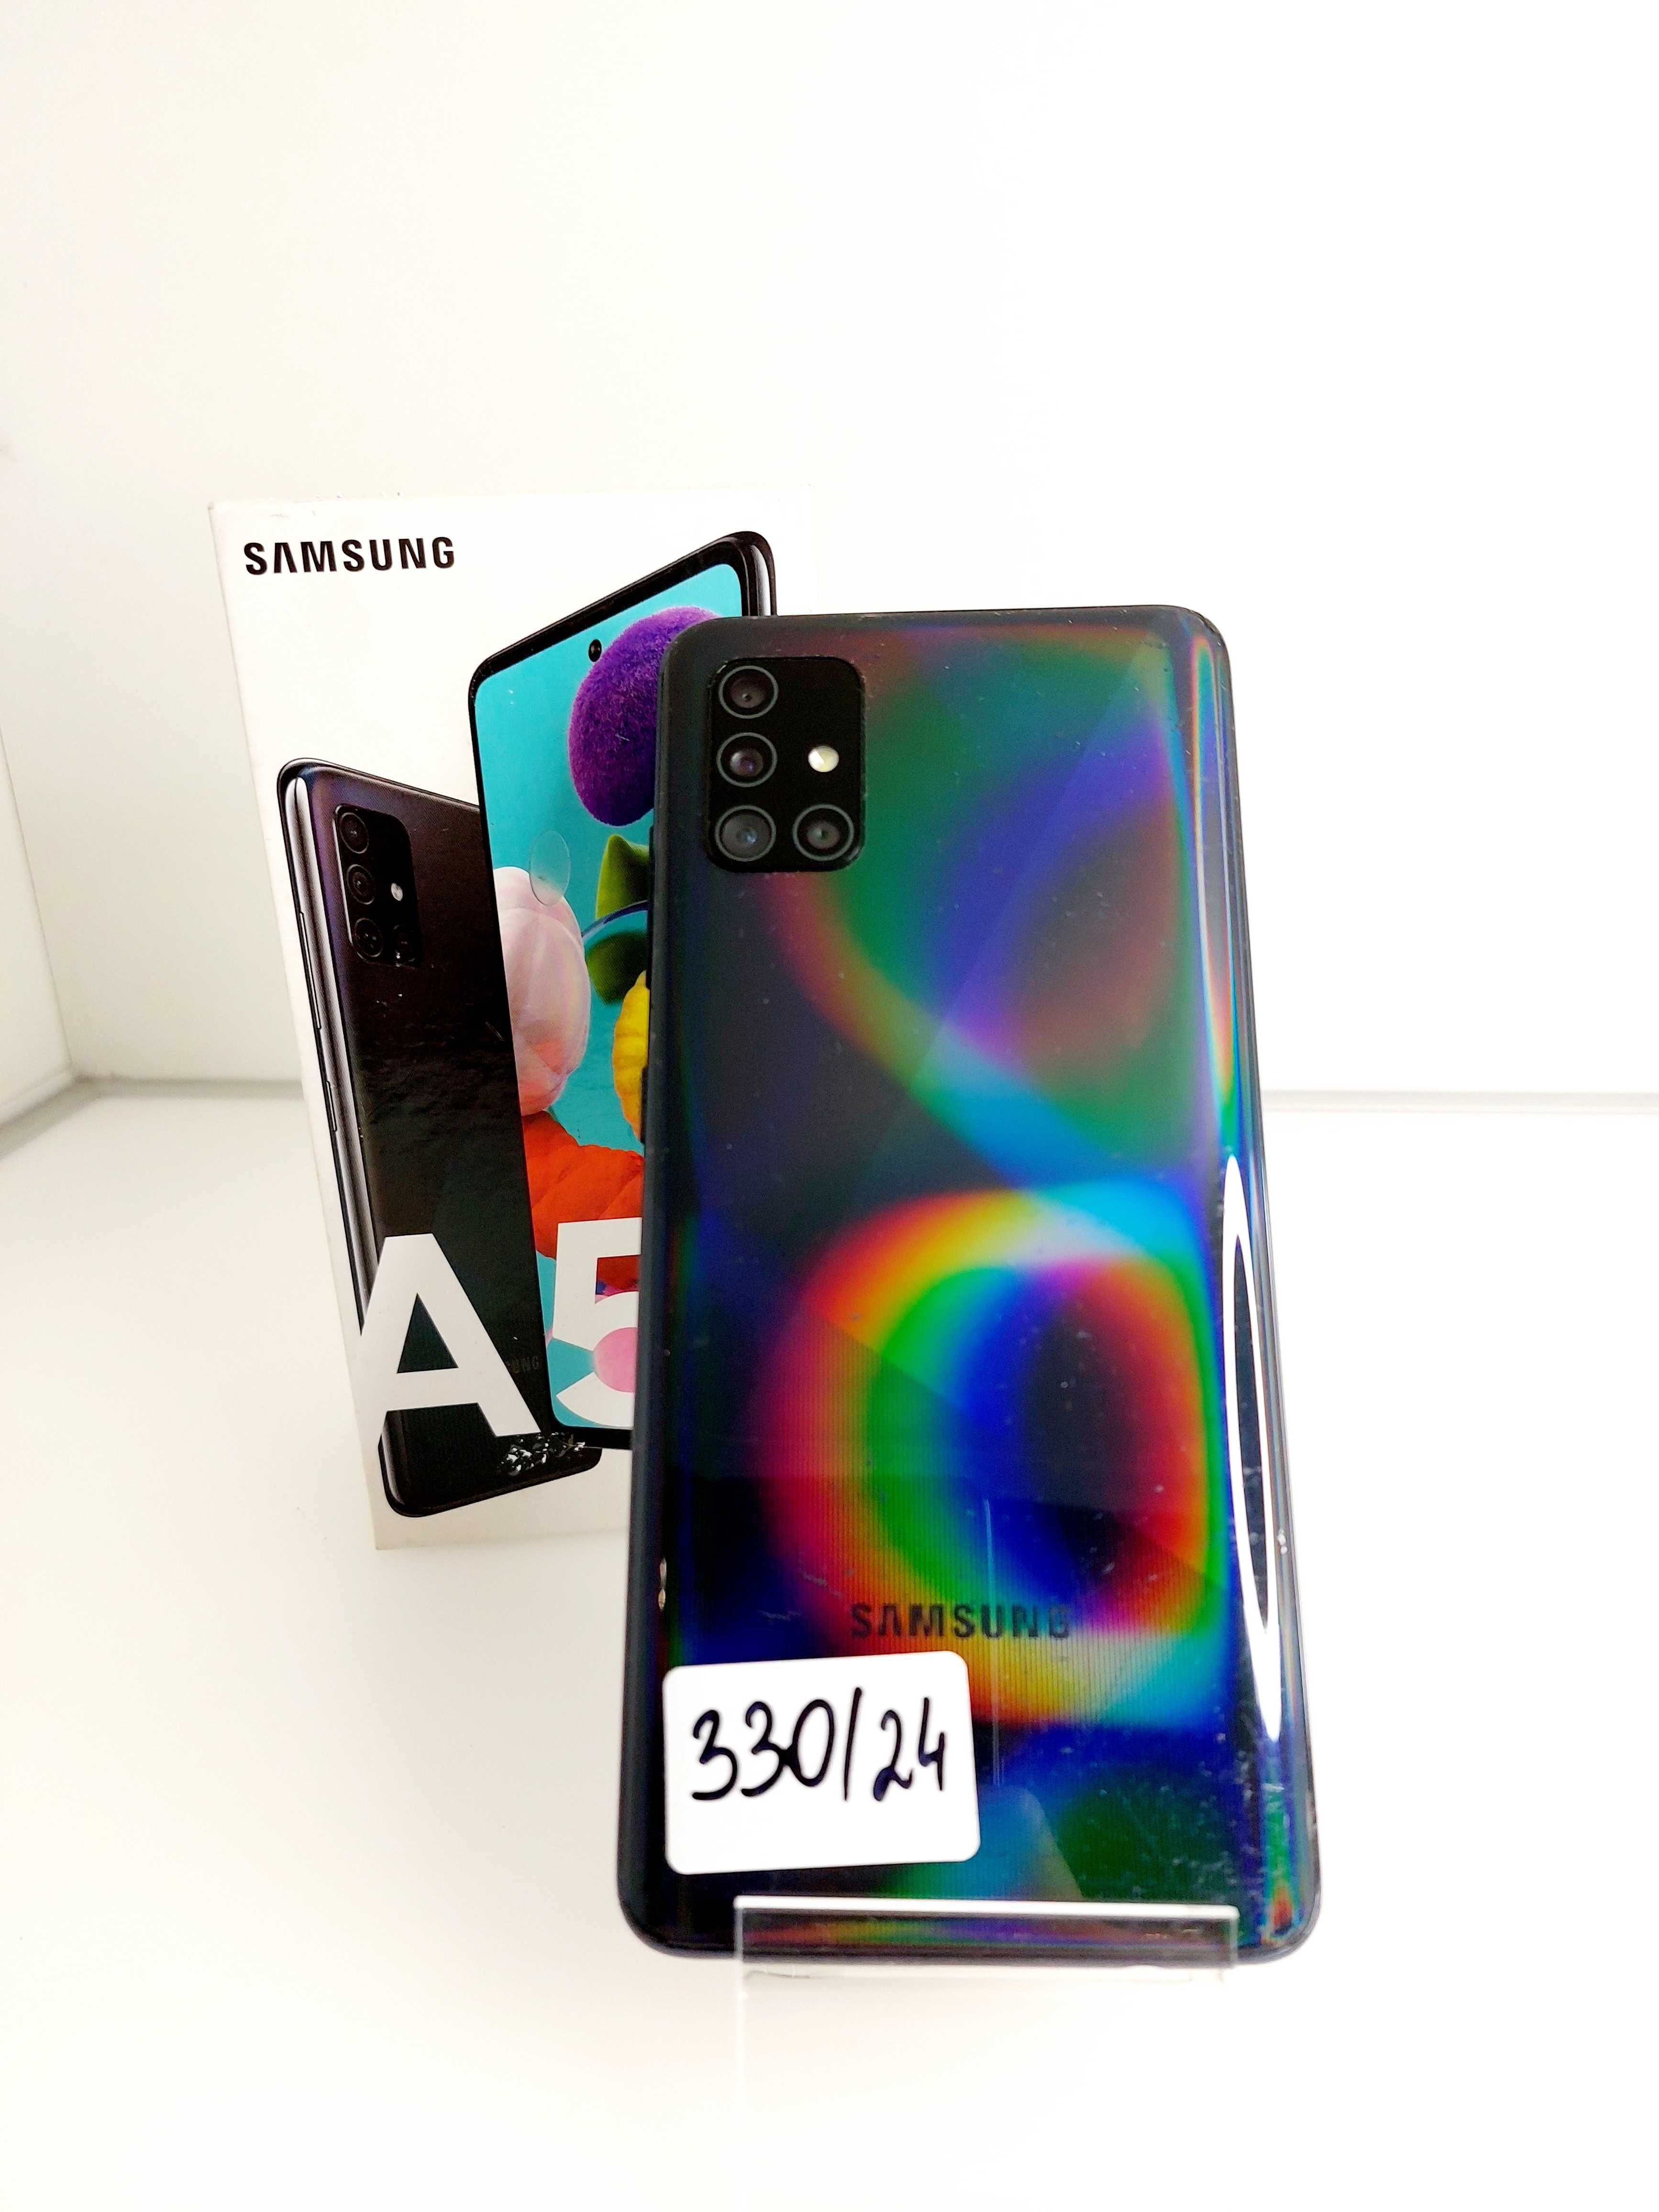 Smartfon Samsung galaxy a51 (330/23psz)